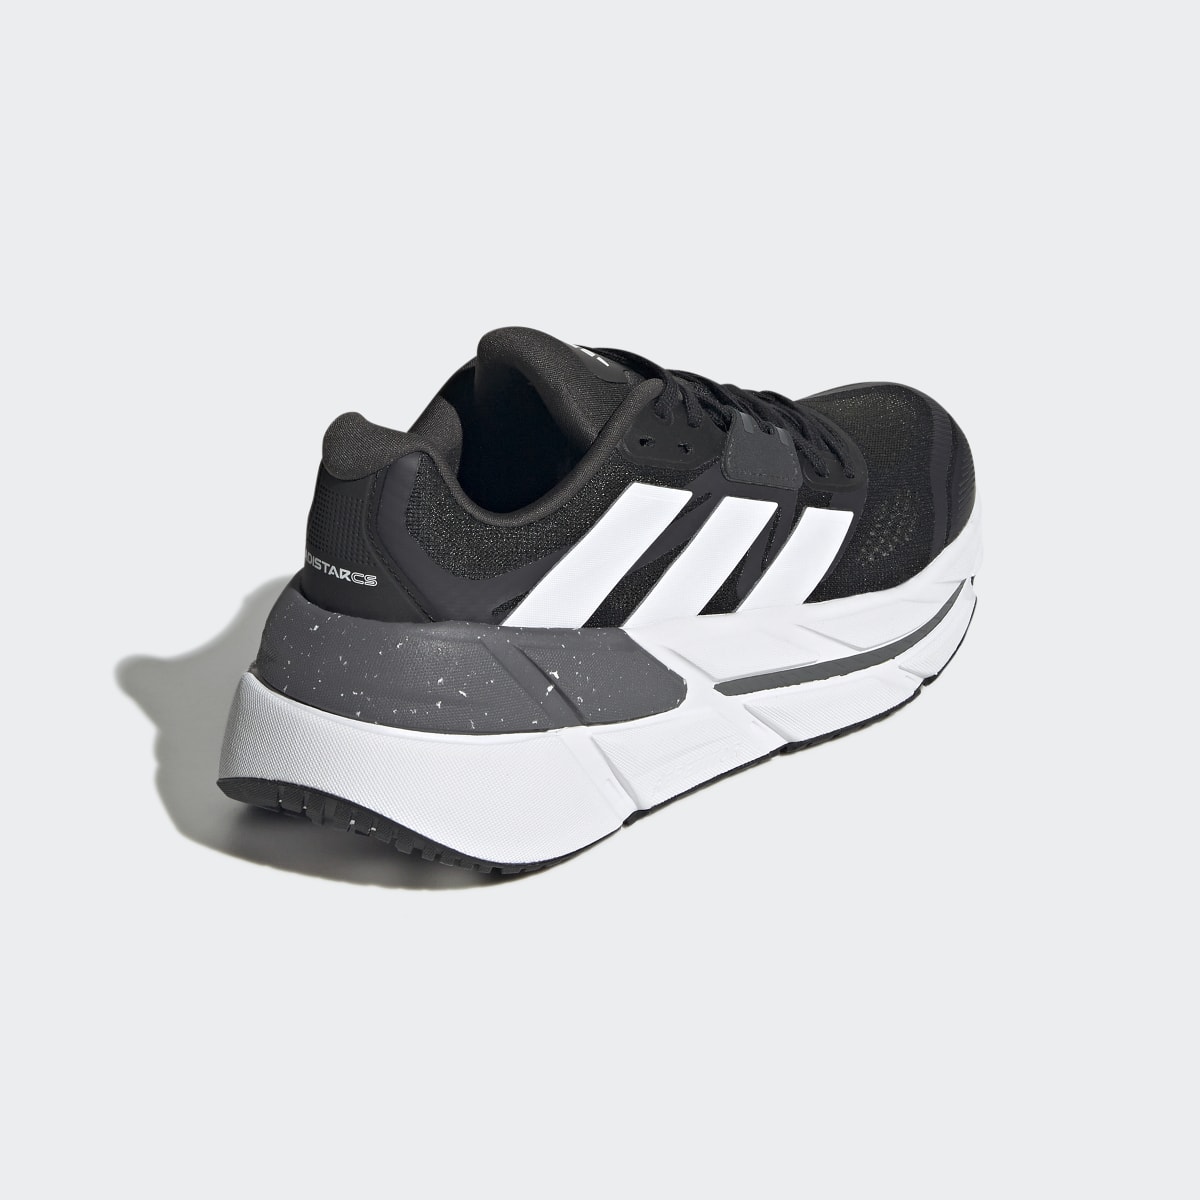 Adidas Adistar CS Running Shoes. 6